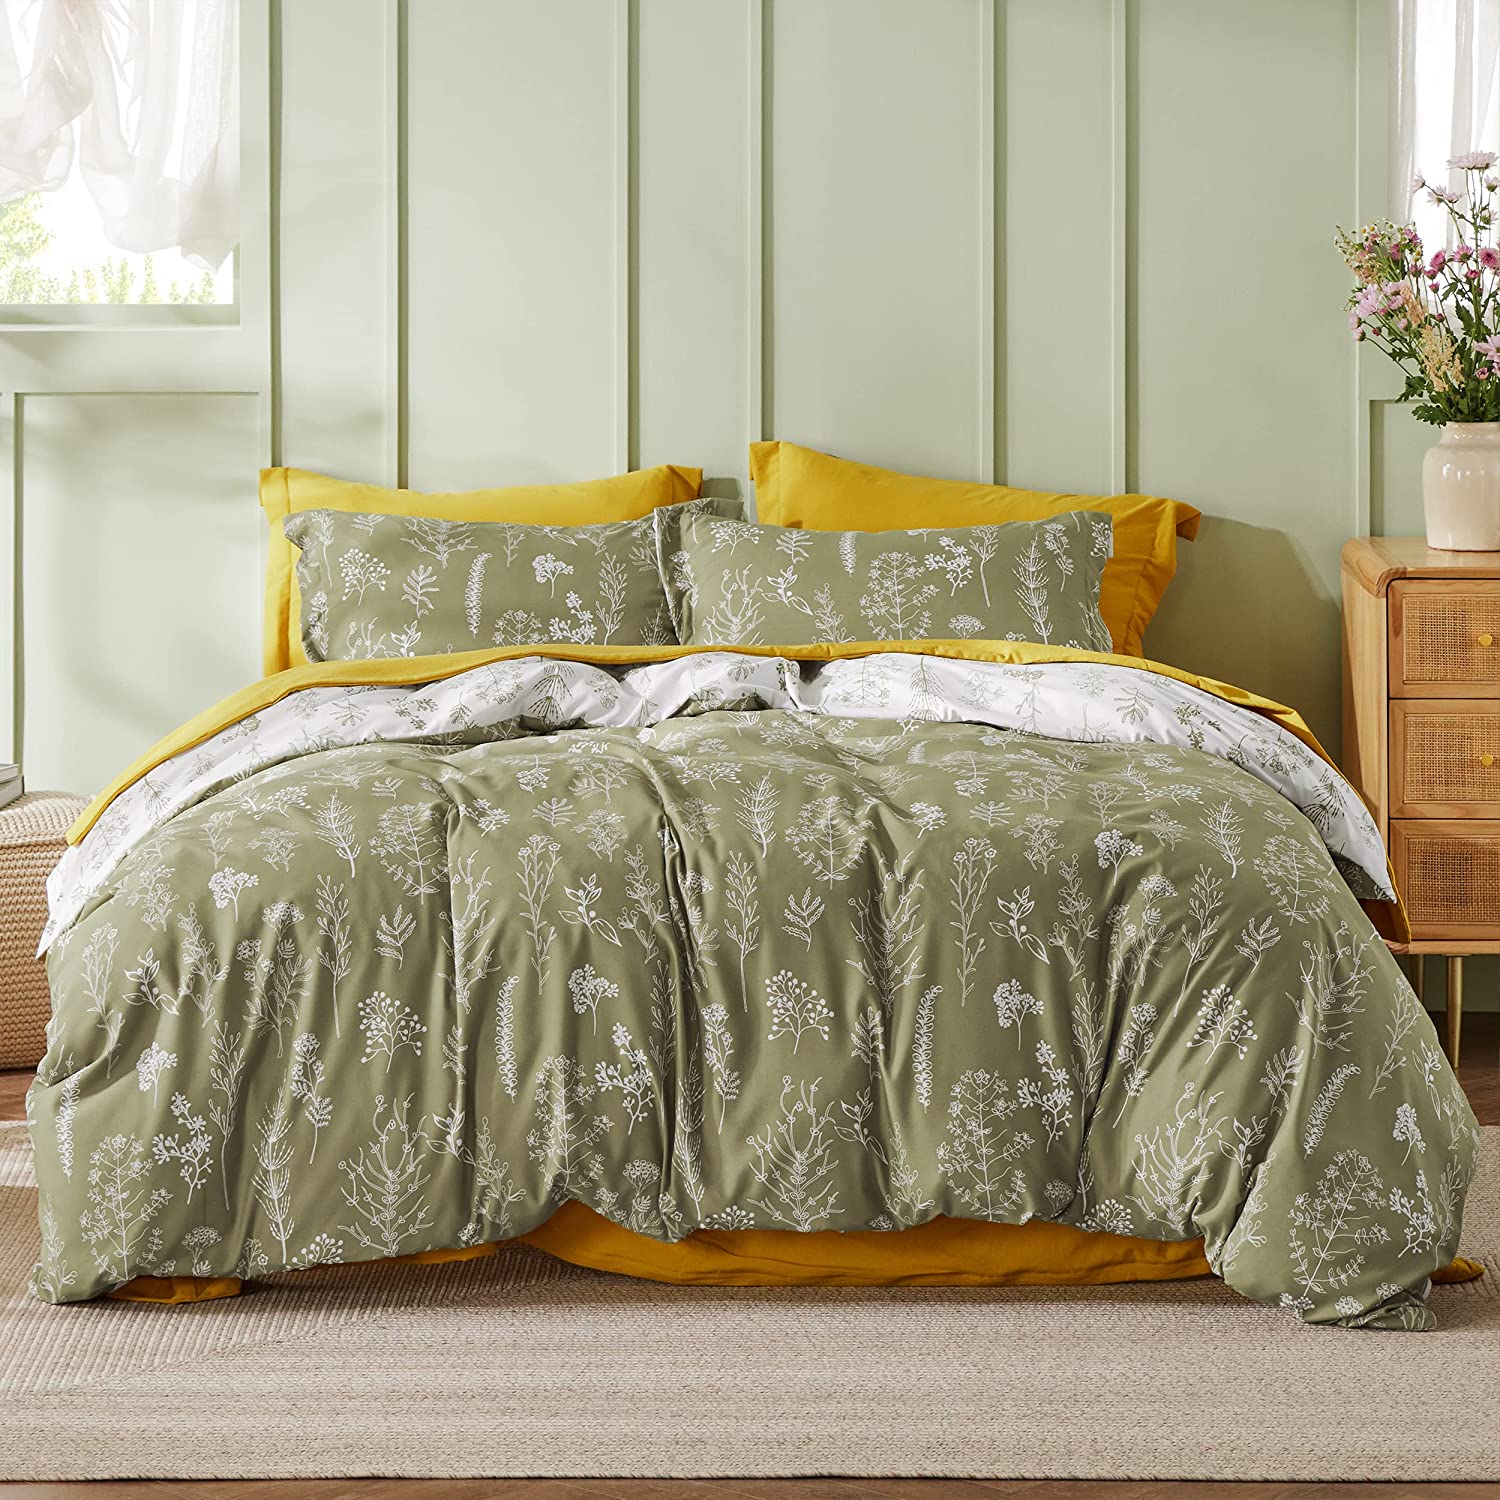 Bedsure Queen Comforter Set Sage Green- Bedding Comforter Set, Comforters  Queen Size Flower Plants Queen Comforter with 2 Pillow Shams (Queen/Full,  88x88 inches, 3 Pieces) : : Home